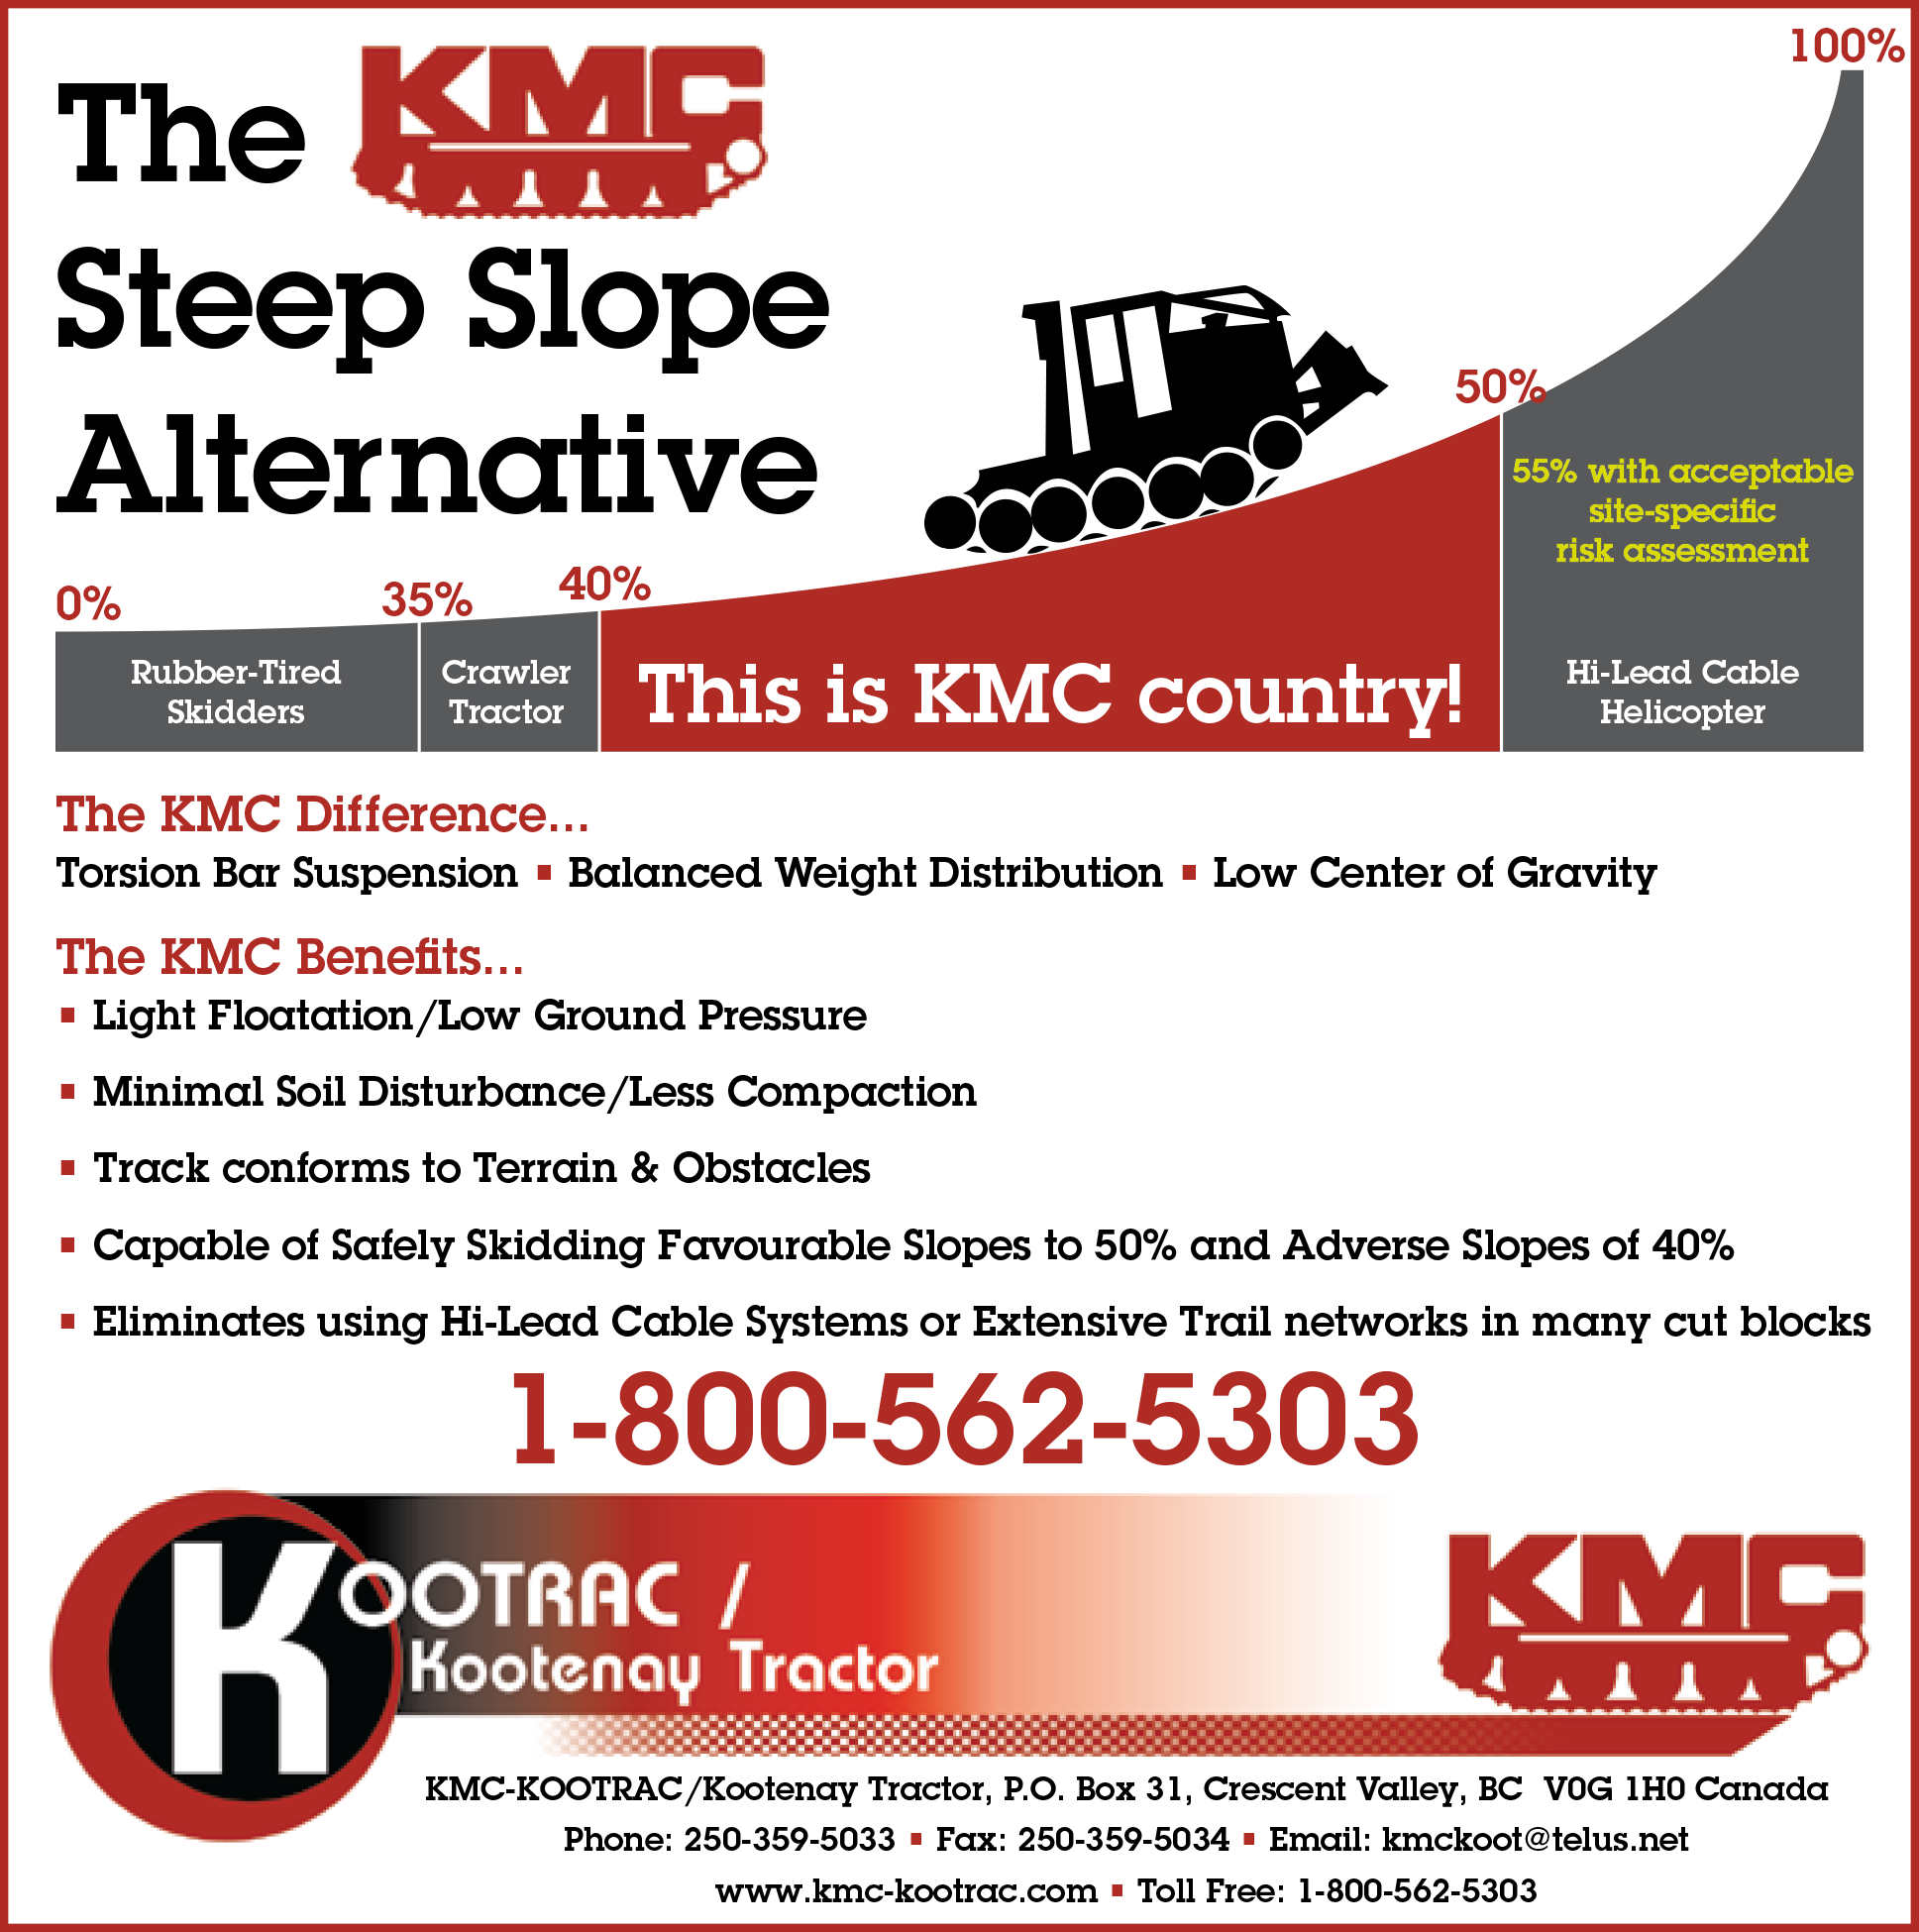 The KMC Steep Slope Alternative